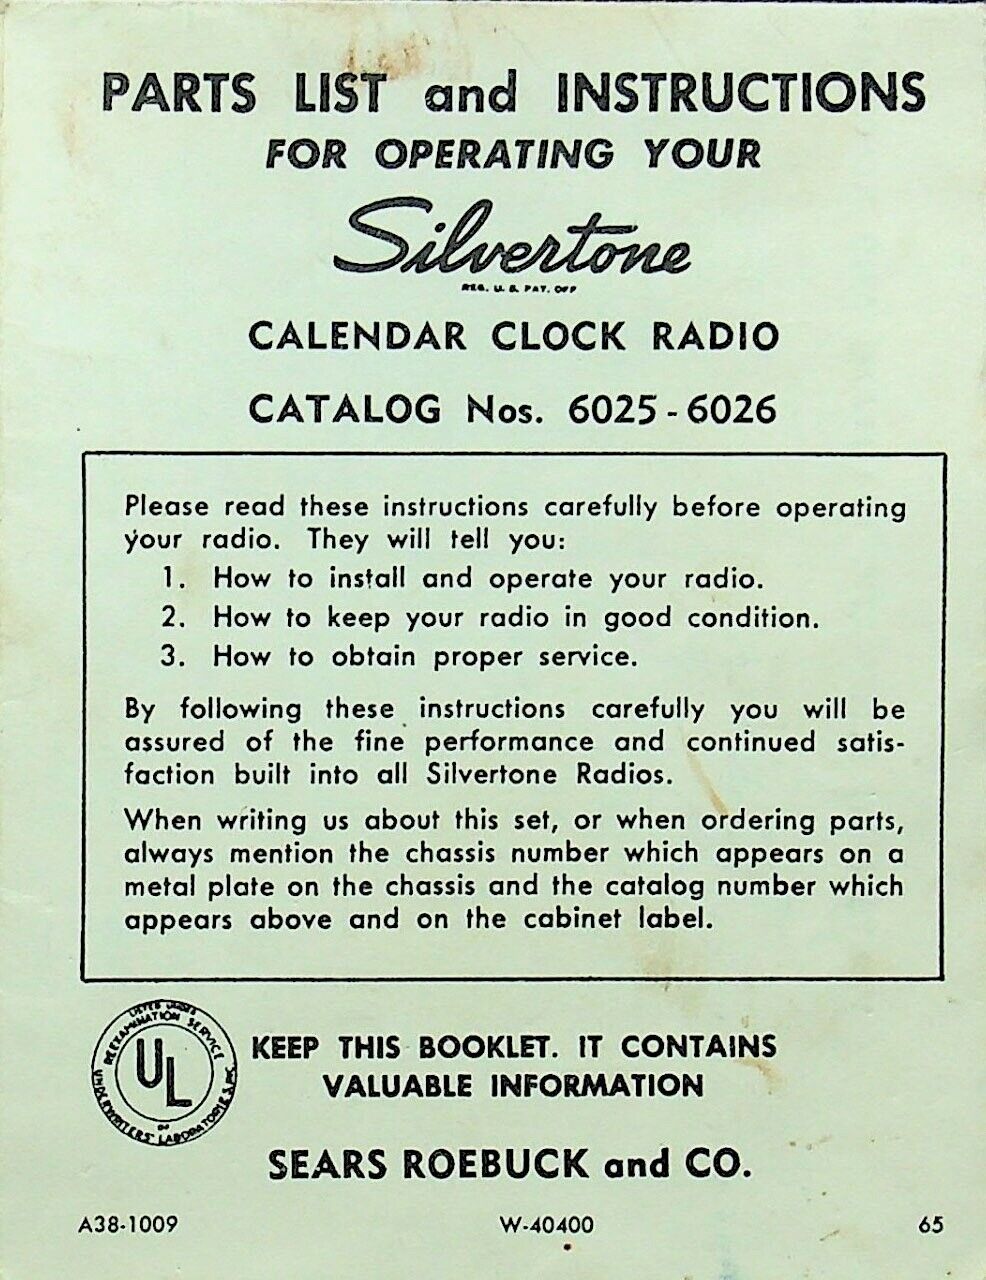 1956 Sears Silvertone Model 6025 - 6026 Calendar Clock Radio Parts/Instructions